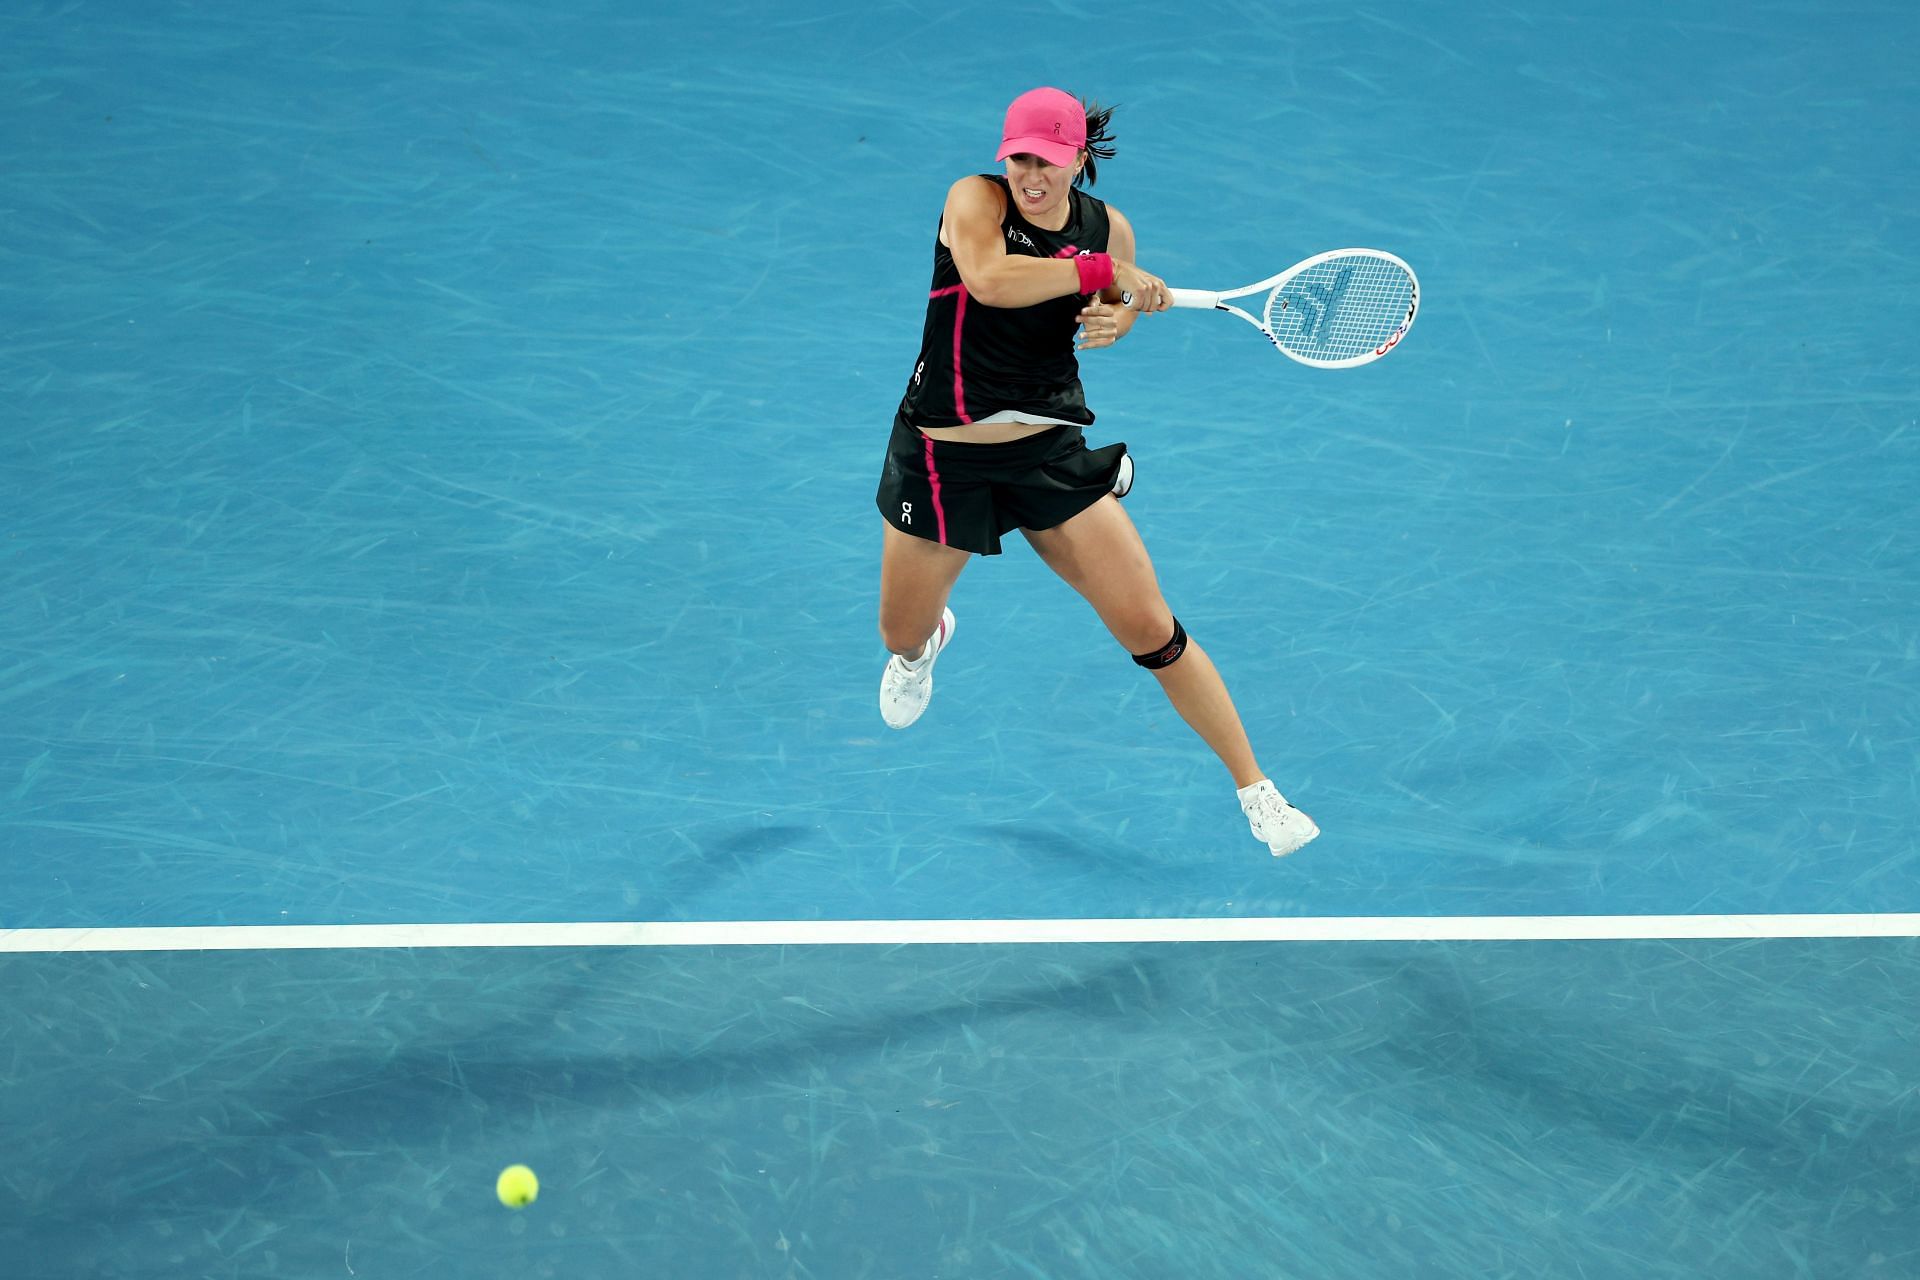 Iga Swiatek in action at the Australian Open